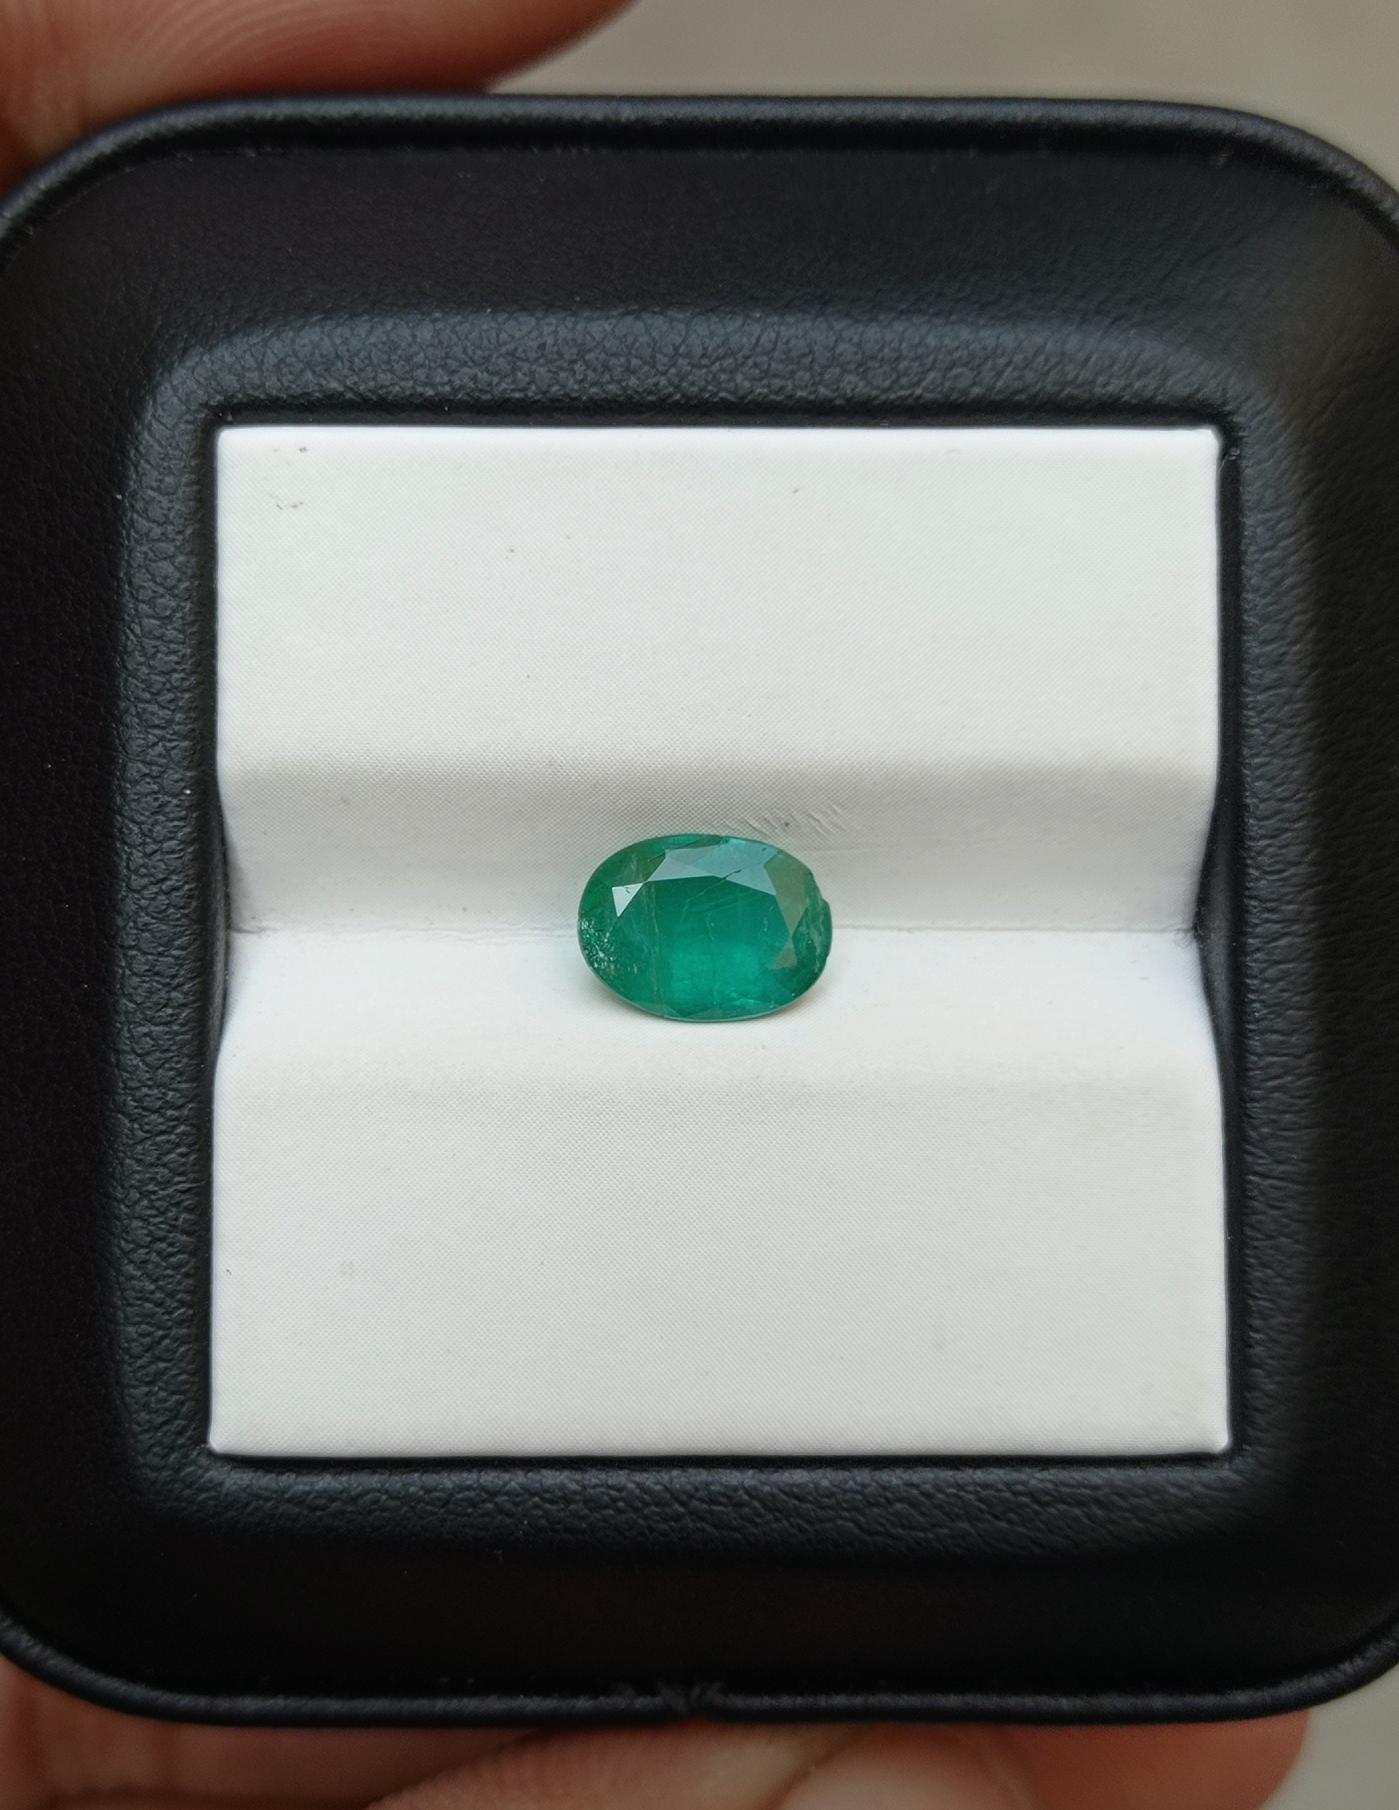 1.20ct Emerald for sale - Budh Ratna - Zamurd - Pachu Stone, Markat Mani Stone - 9x6.4x3.5mm